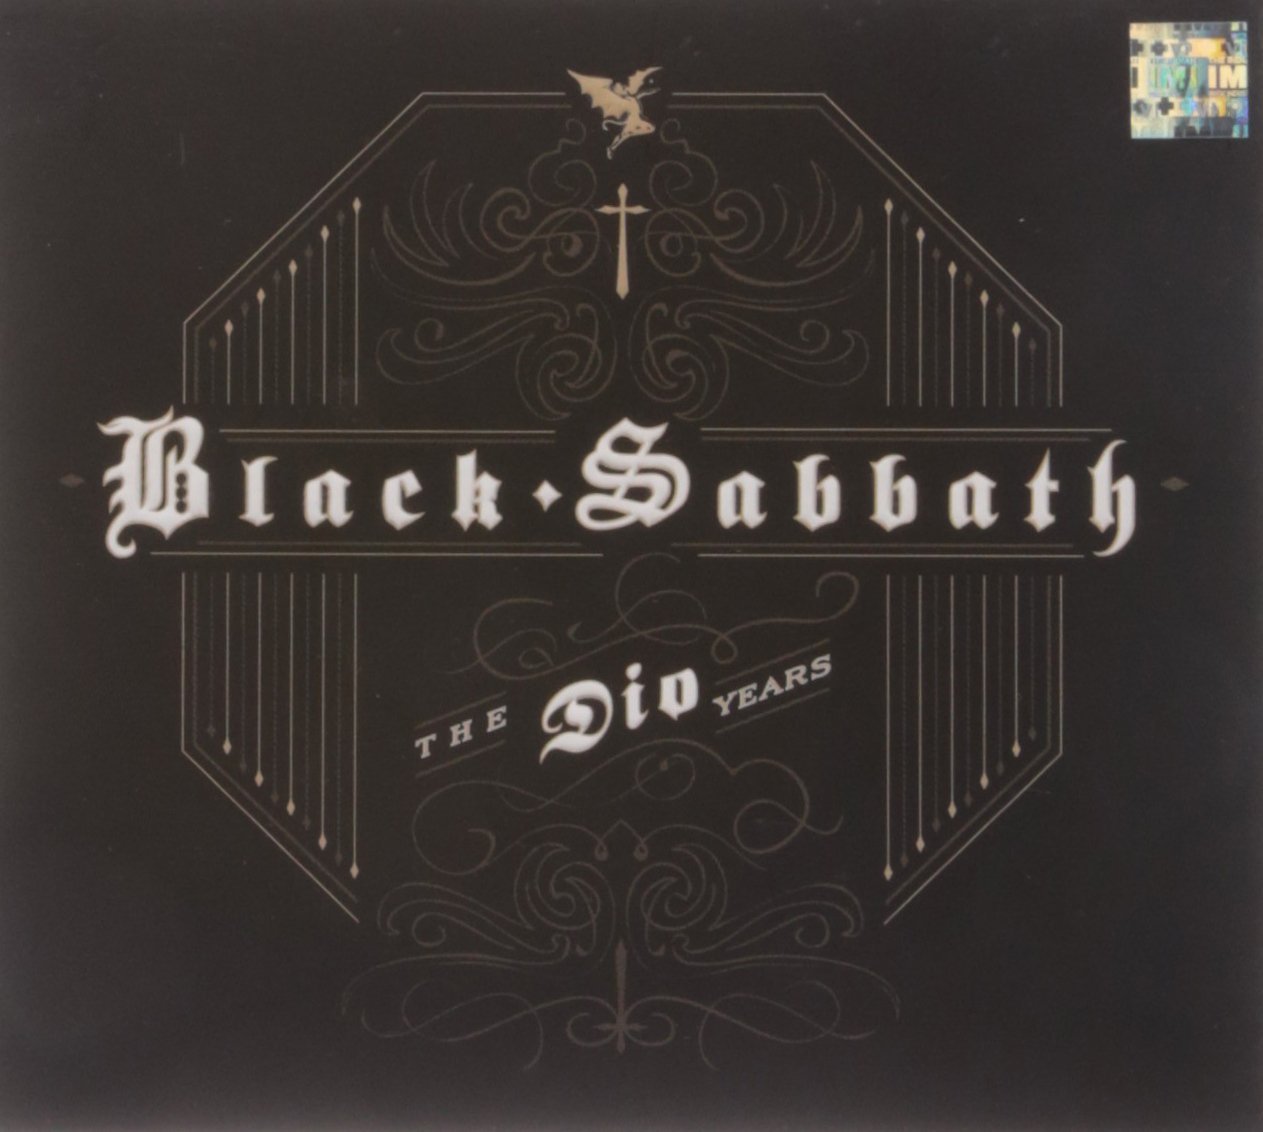 Black Sabbath "The Dio Years" CD